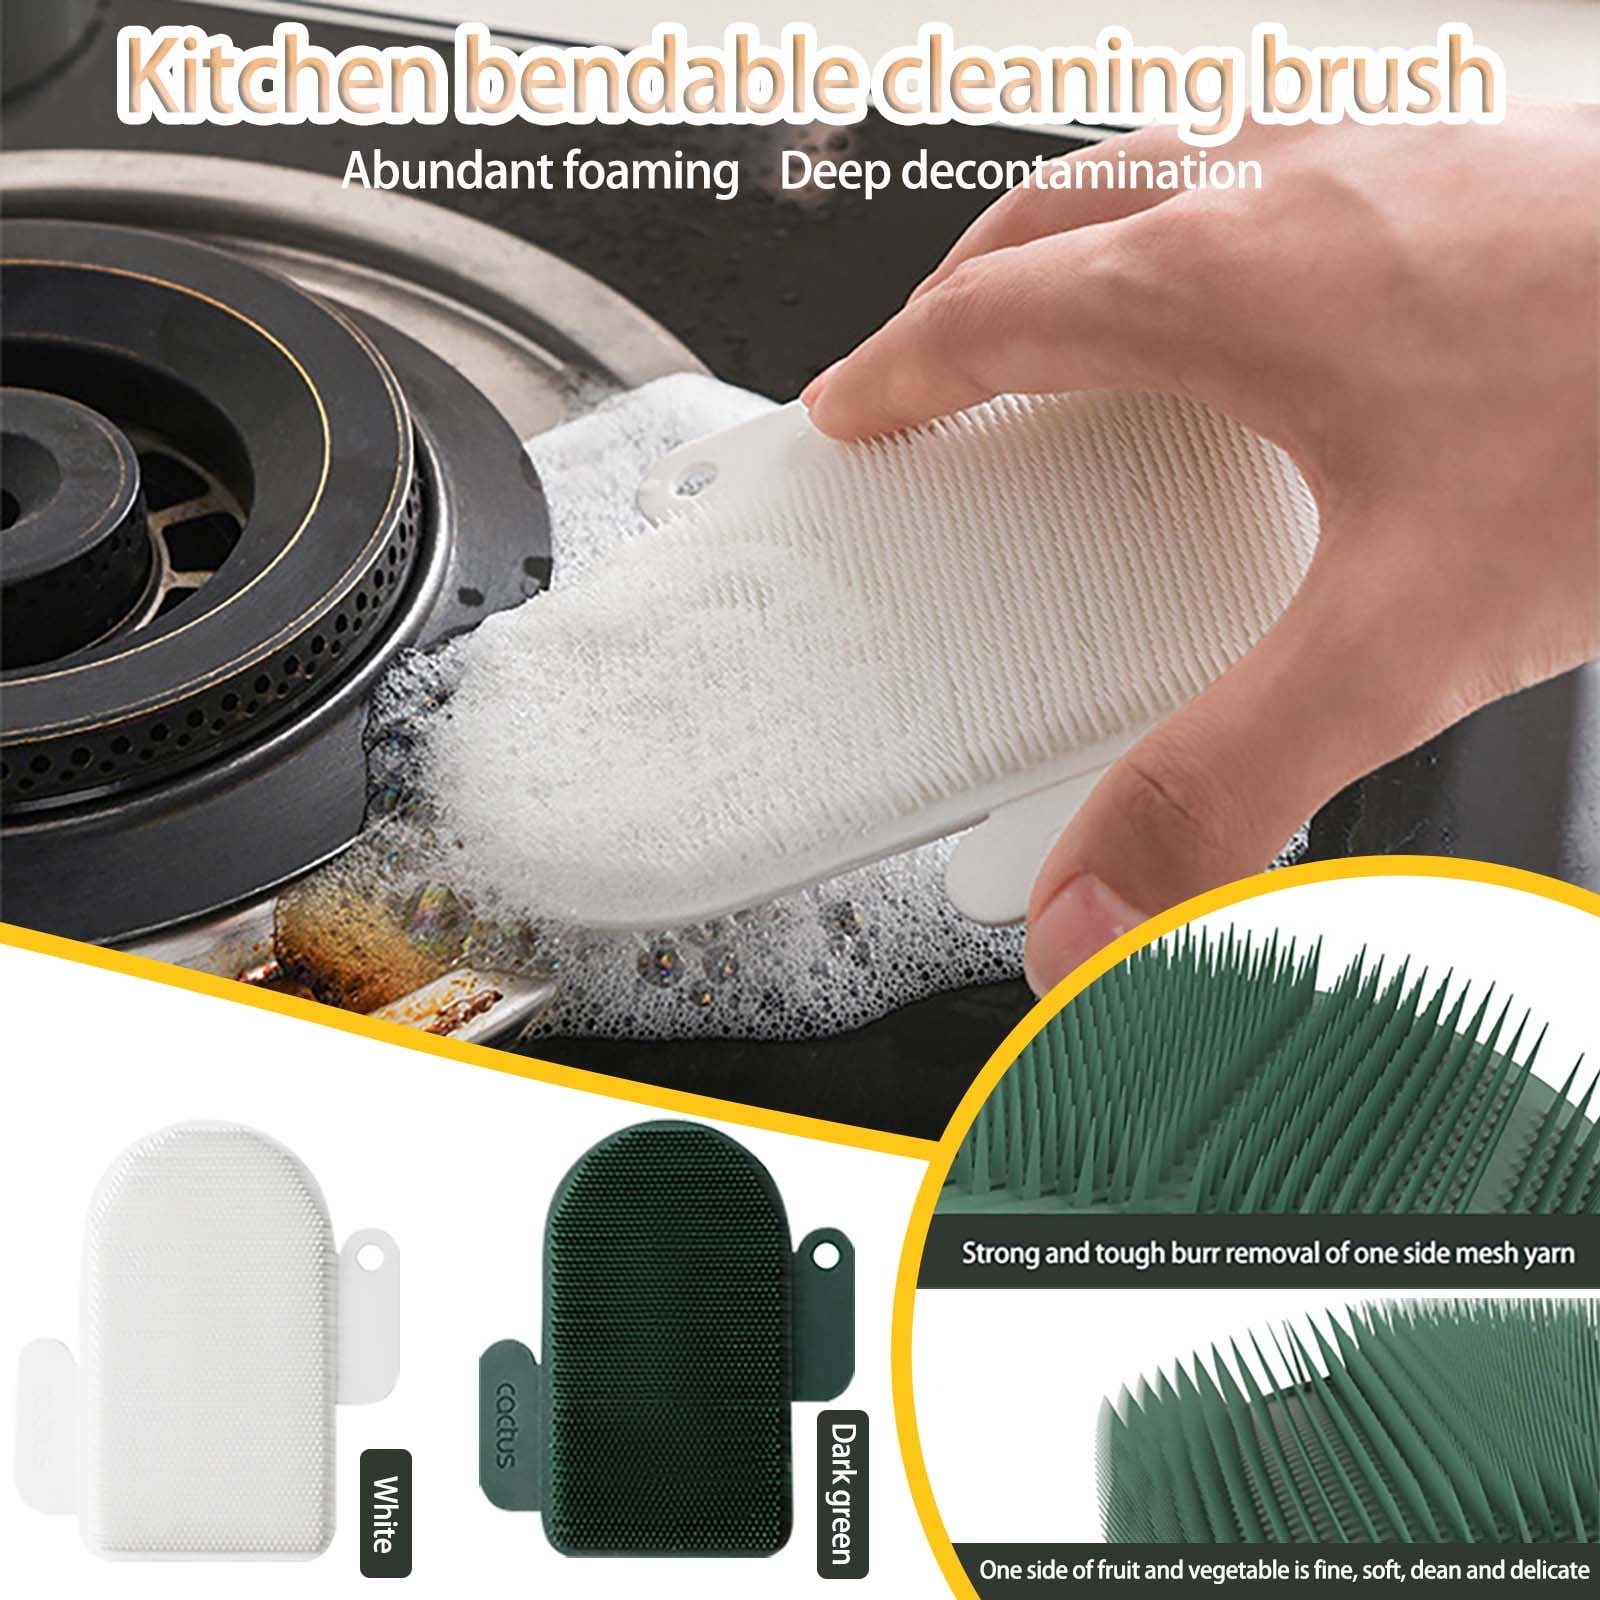 Woxinda 2pc Wipe Board Kitchen Mesh Cleaning Brush Brush Flexible Filter Burr Cutting Cleaning Supplies